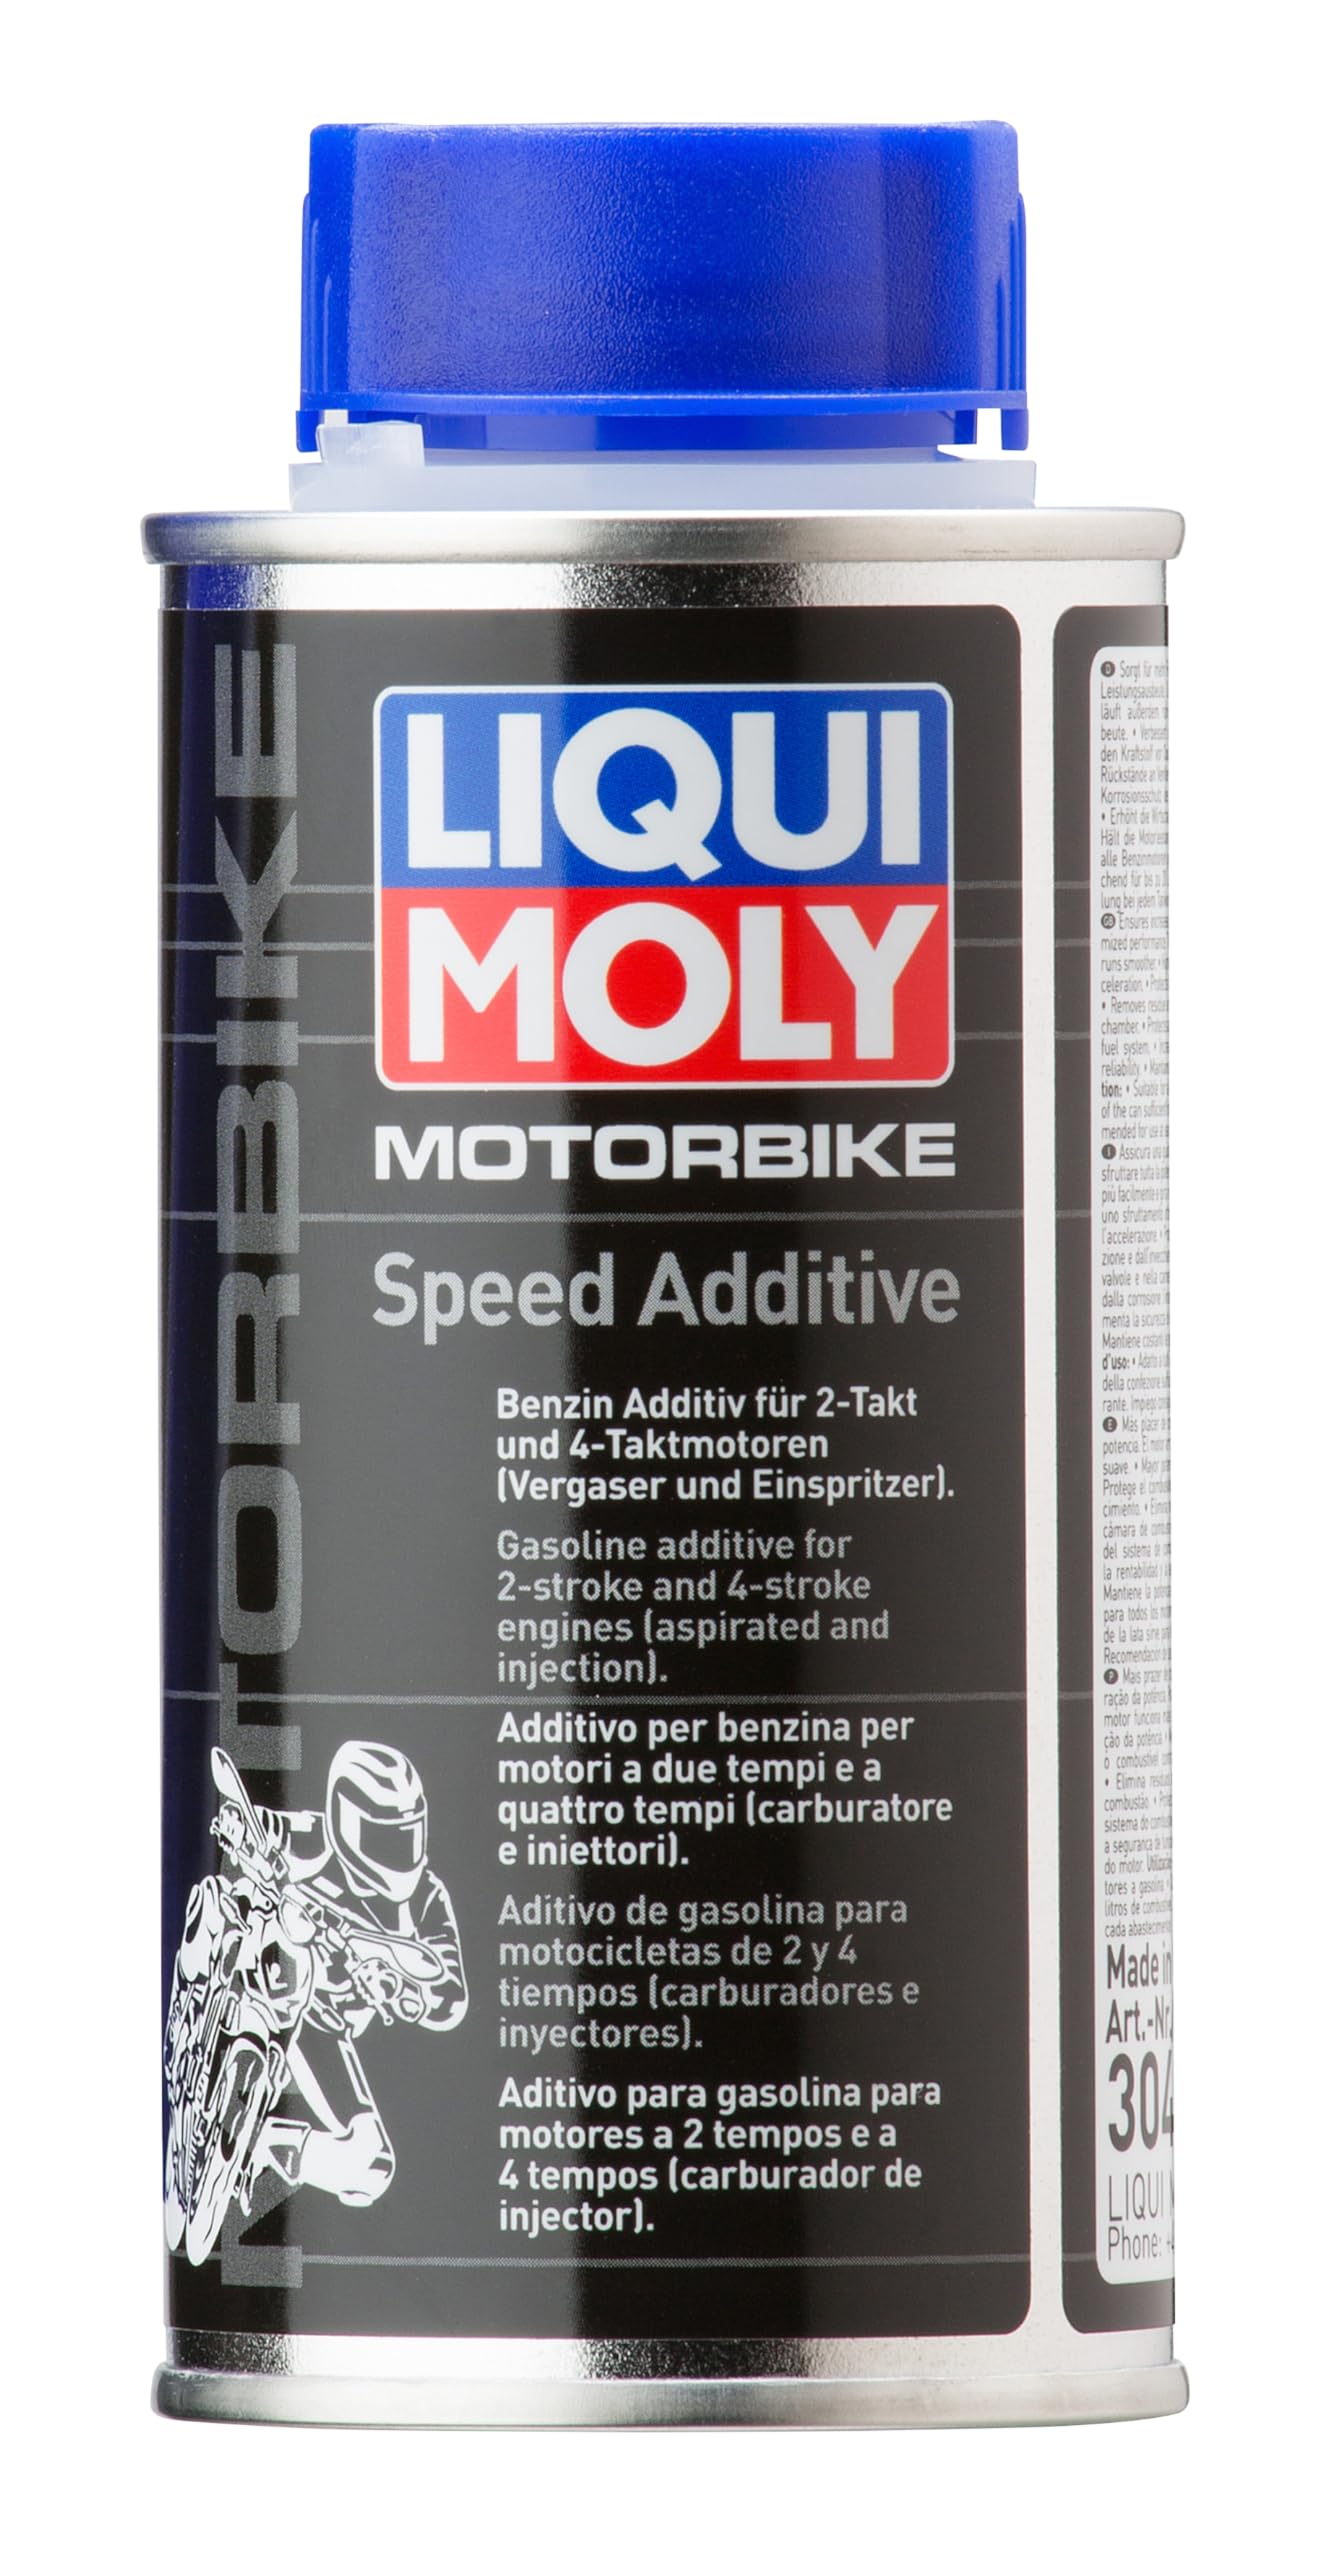 LIQUI MOLY Motorbike Speed Additive | 150 ml | Motorrad Benzinadditiv | Art.-Nr.: 3040, farblos von Liqui Moly